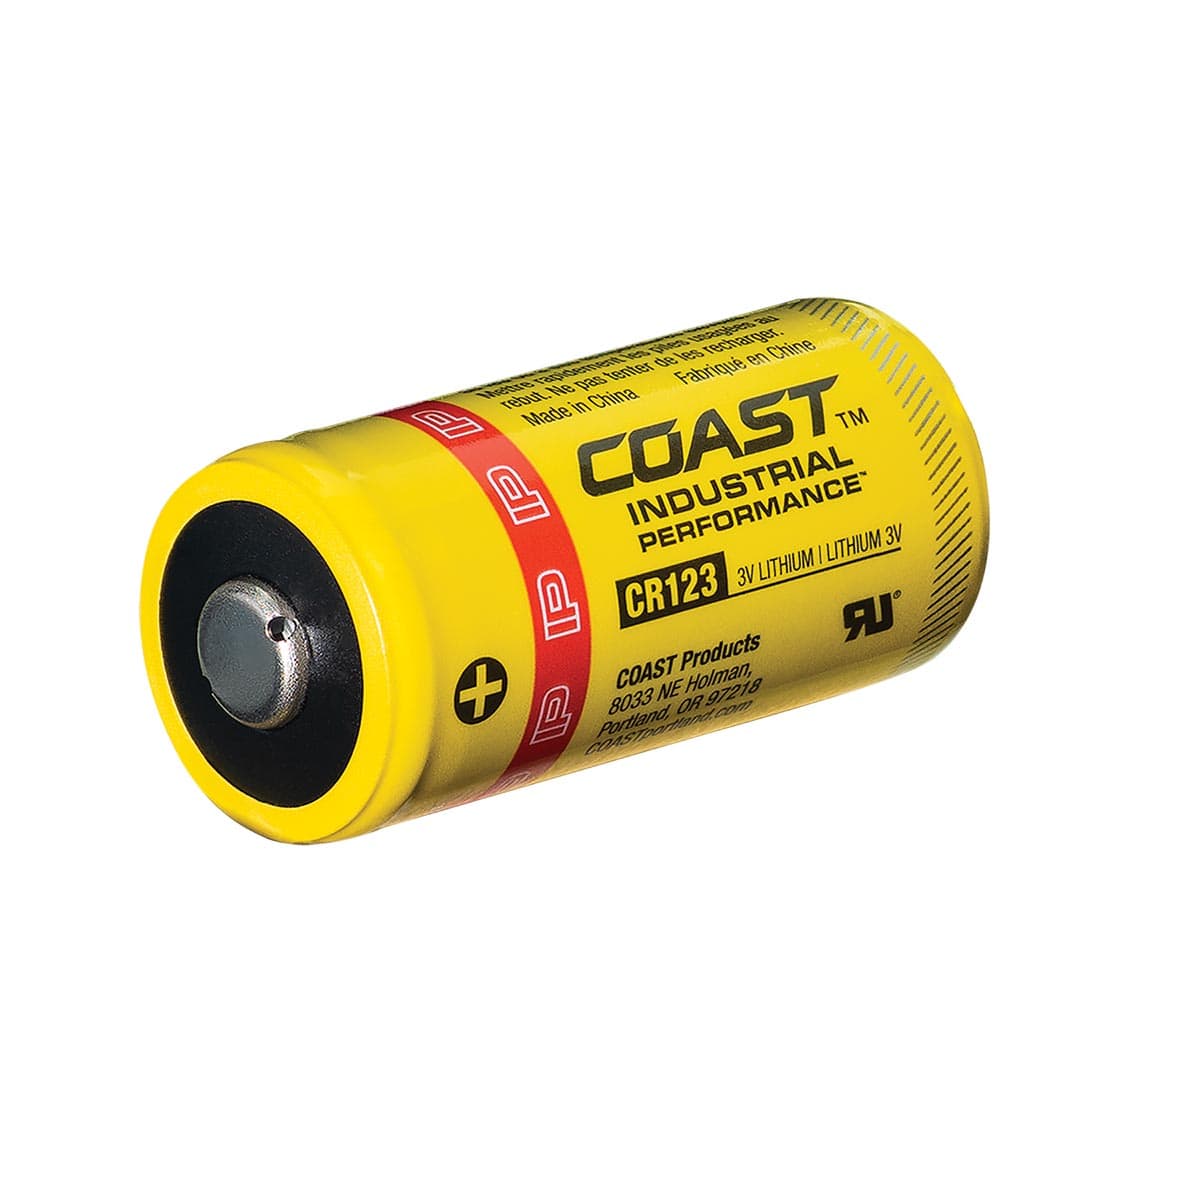 Coast Industrial Performance Lithium Batteries - CR123